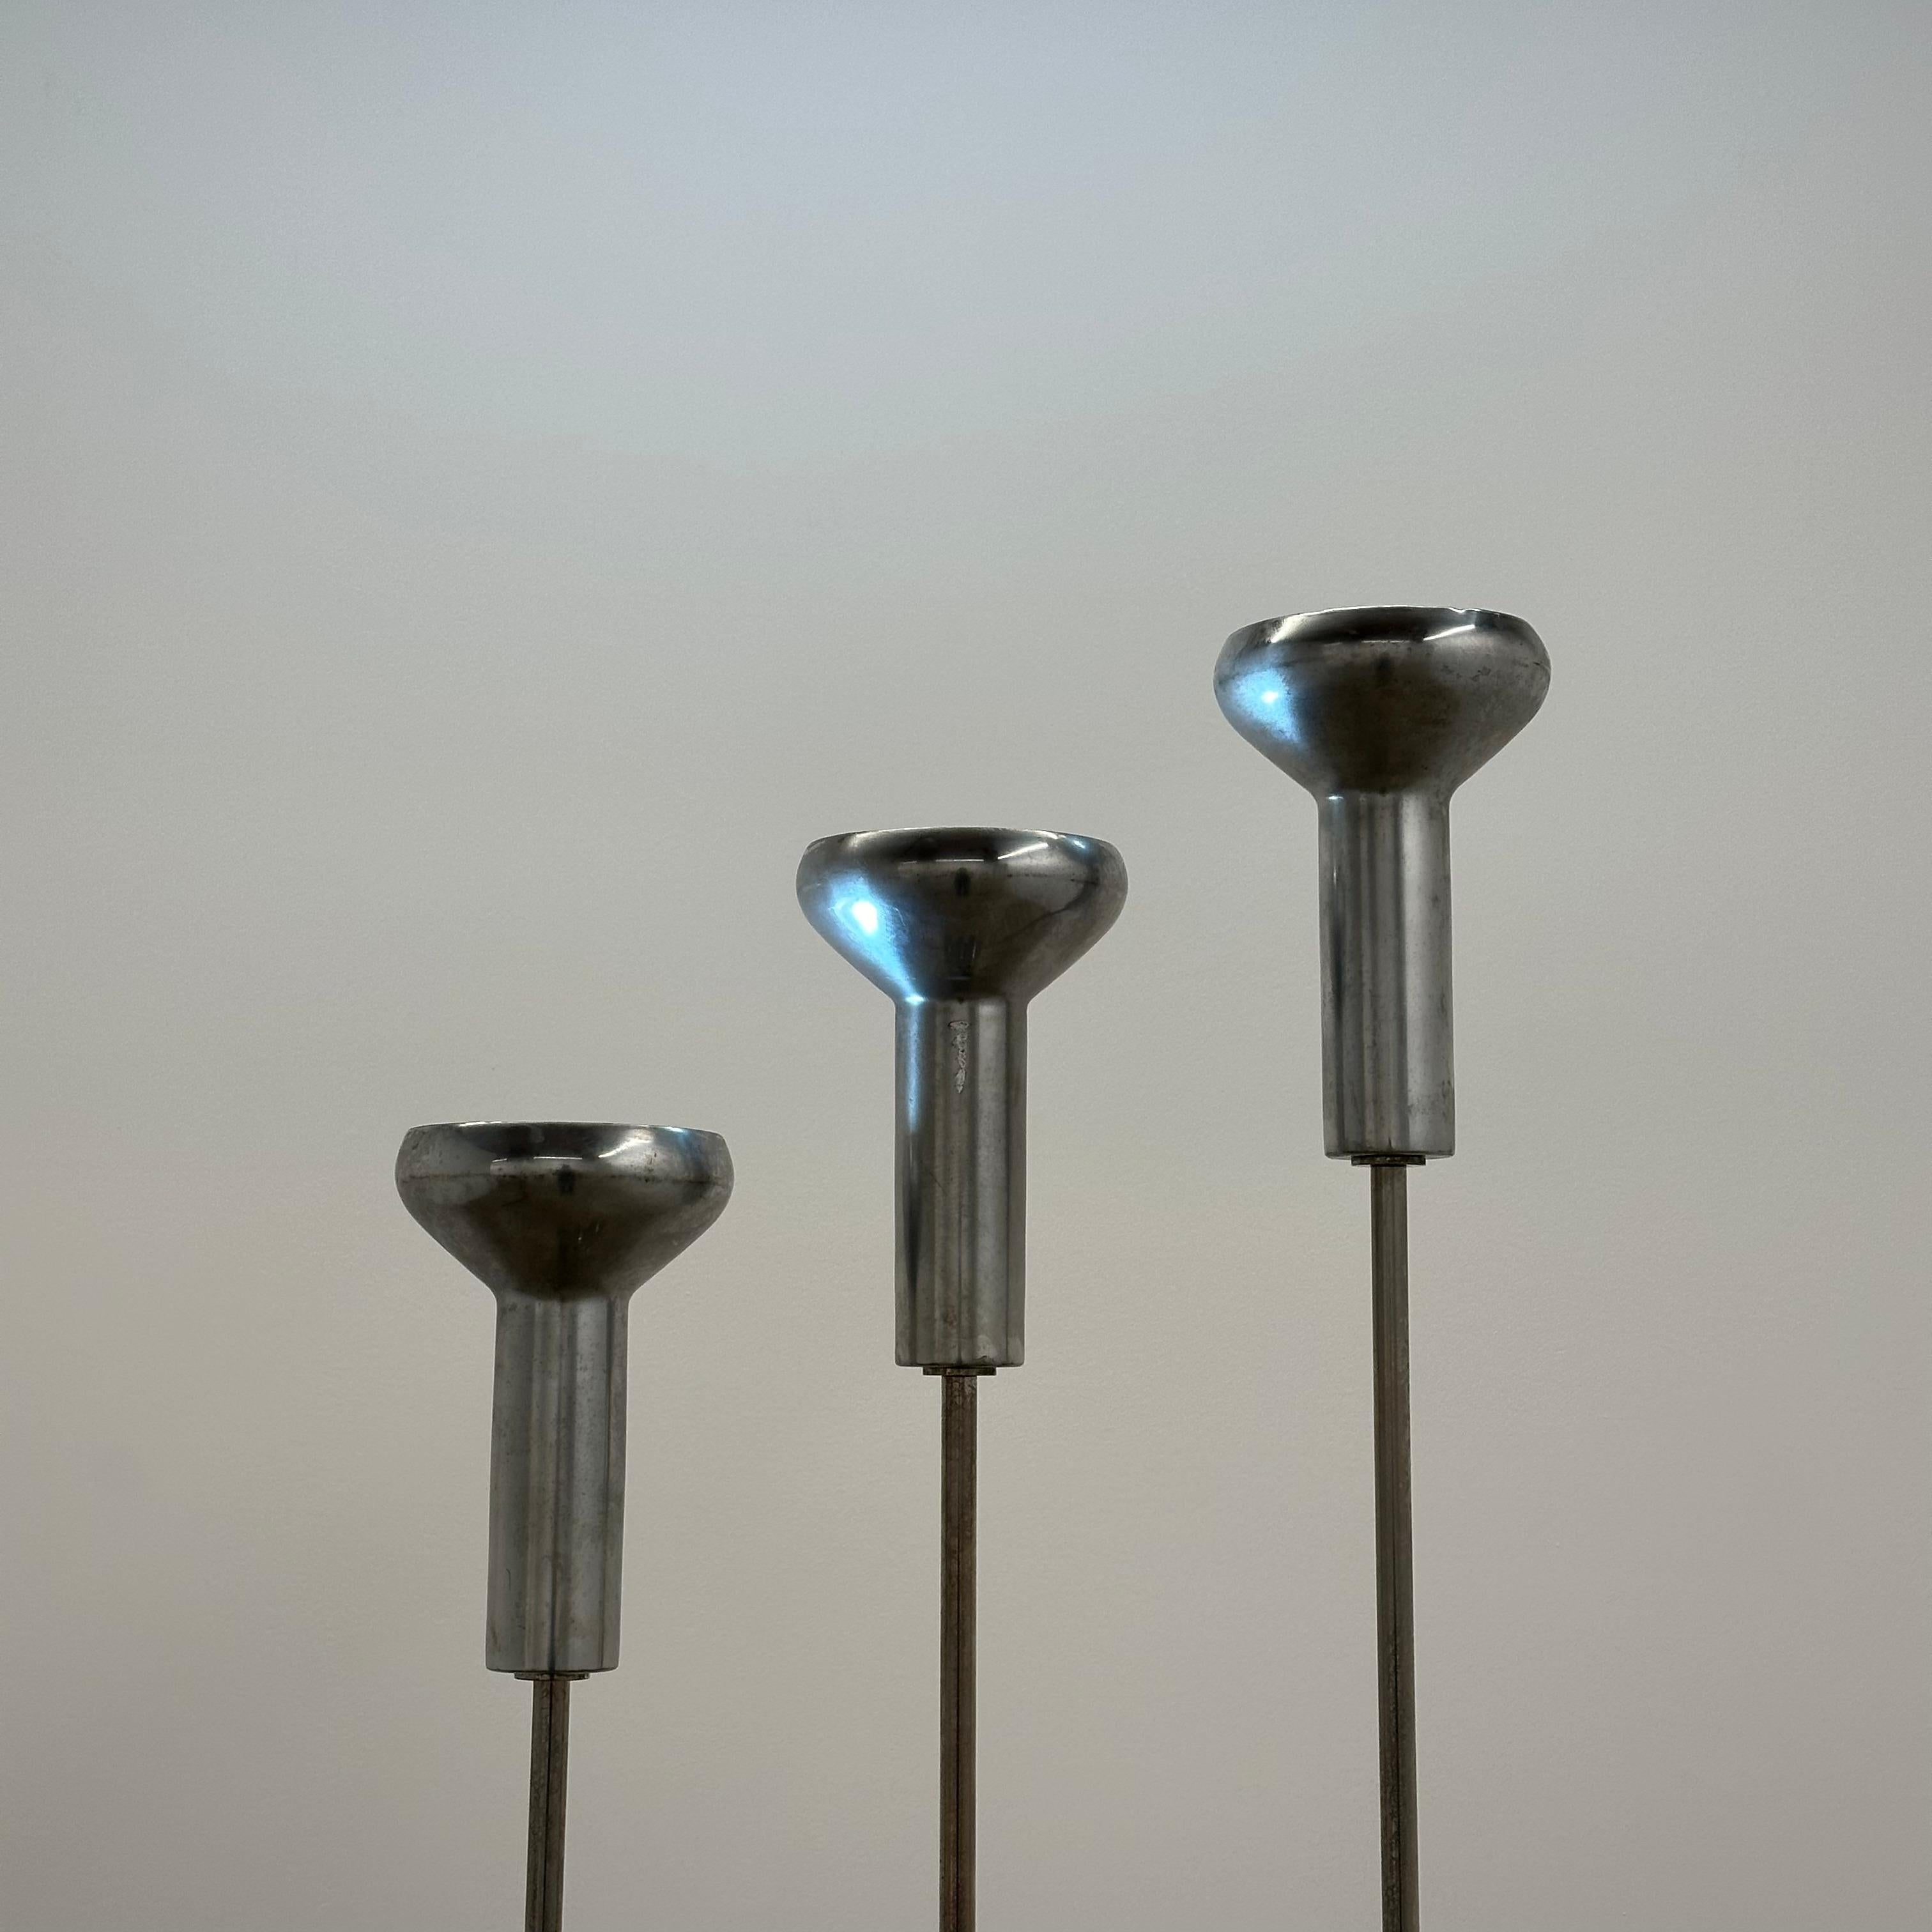 Gino Sarfatti model 1073 floor lamps for Arteluce, Italy, 1960s.

Dimensions: 81.5” H x 9.45” W x 9.45” D (Large), 77.95” H x 9.45” W x 9.45” D (Medium), 72.05” H x 9.45” W x 9.45” D (Small)